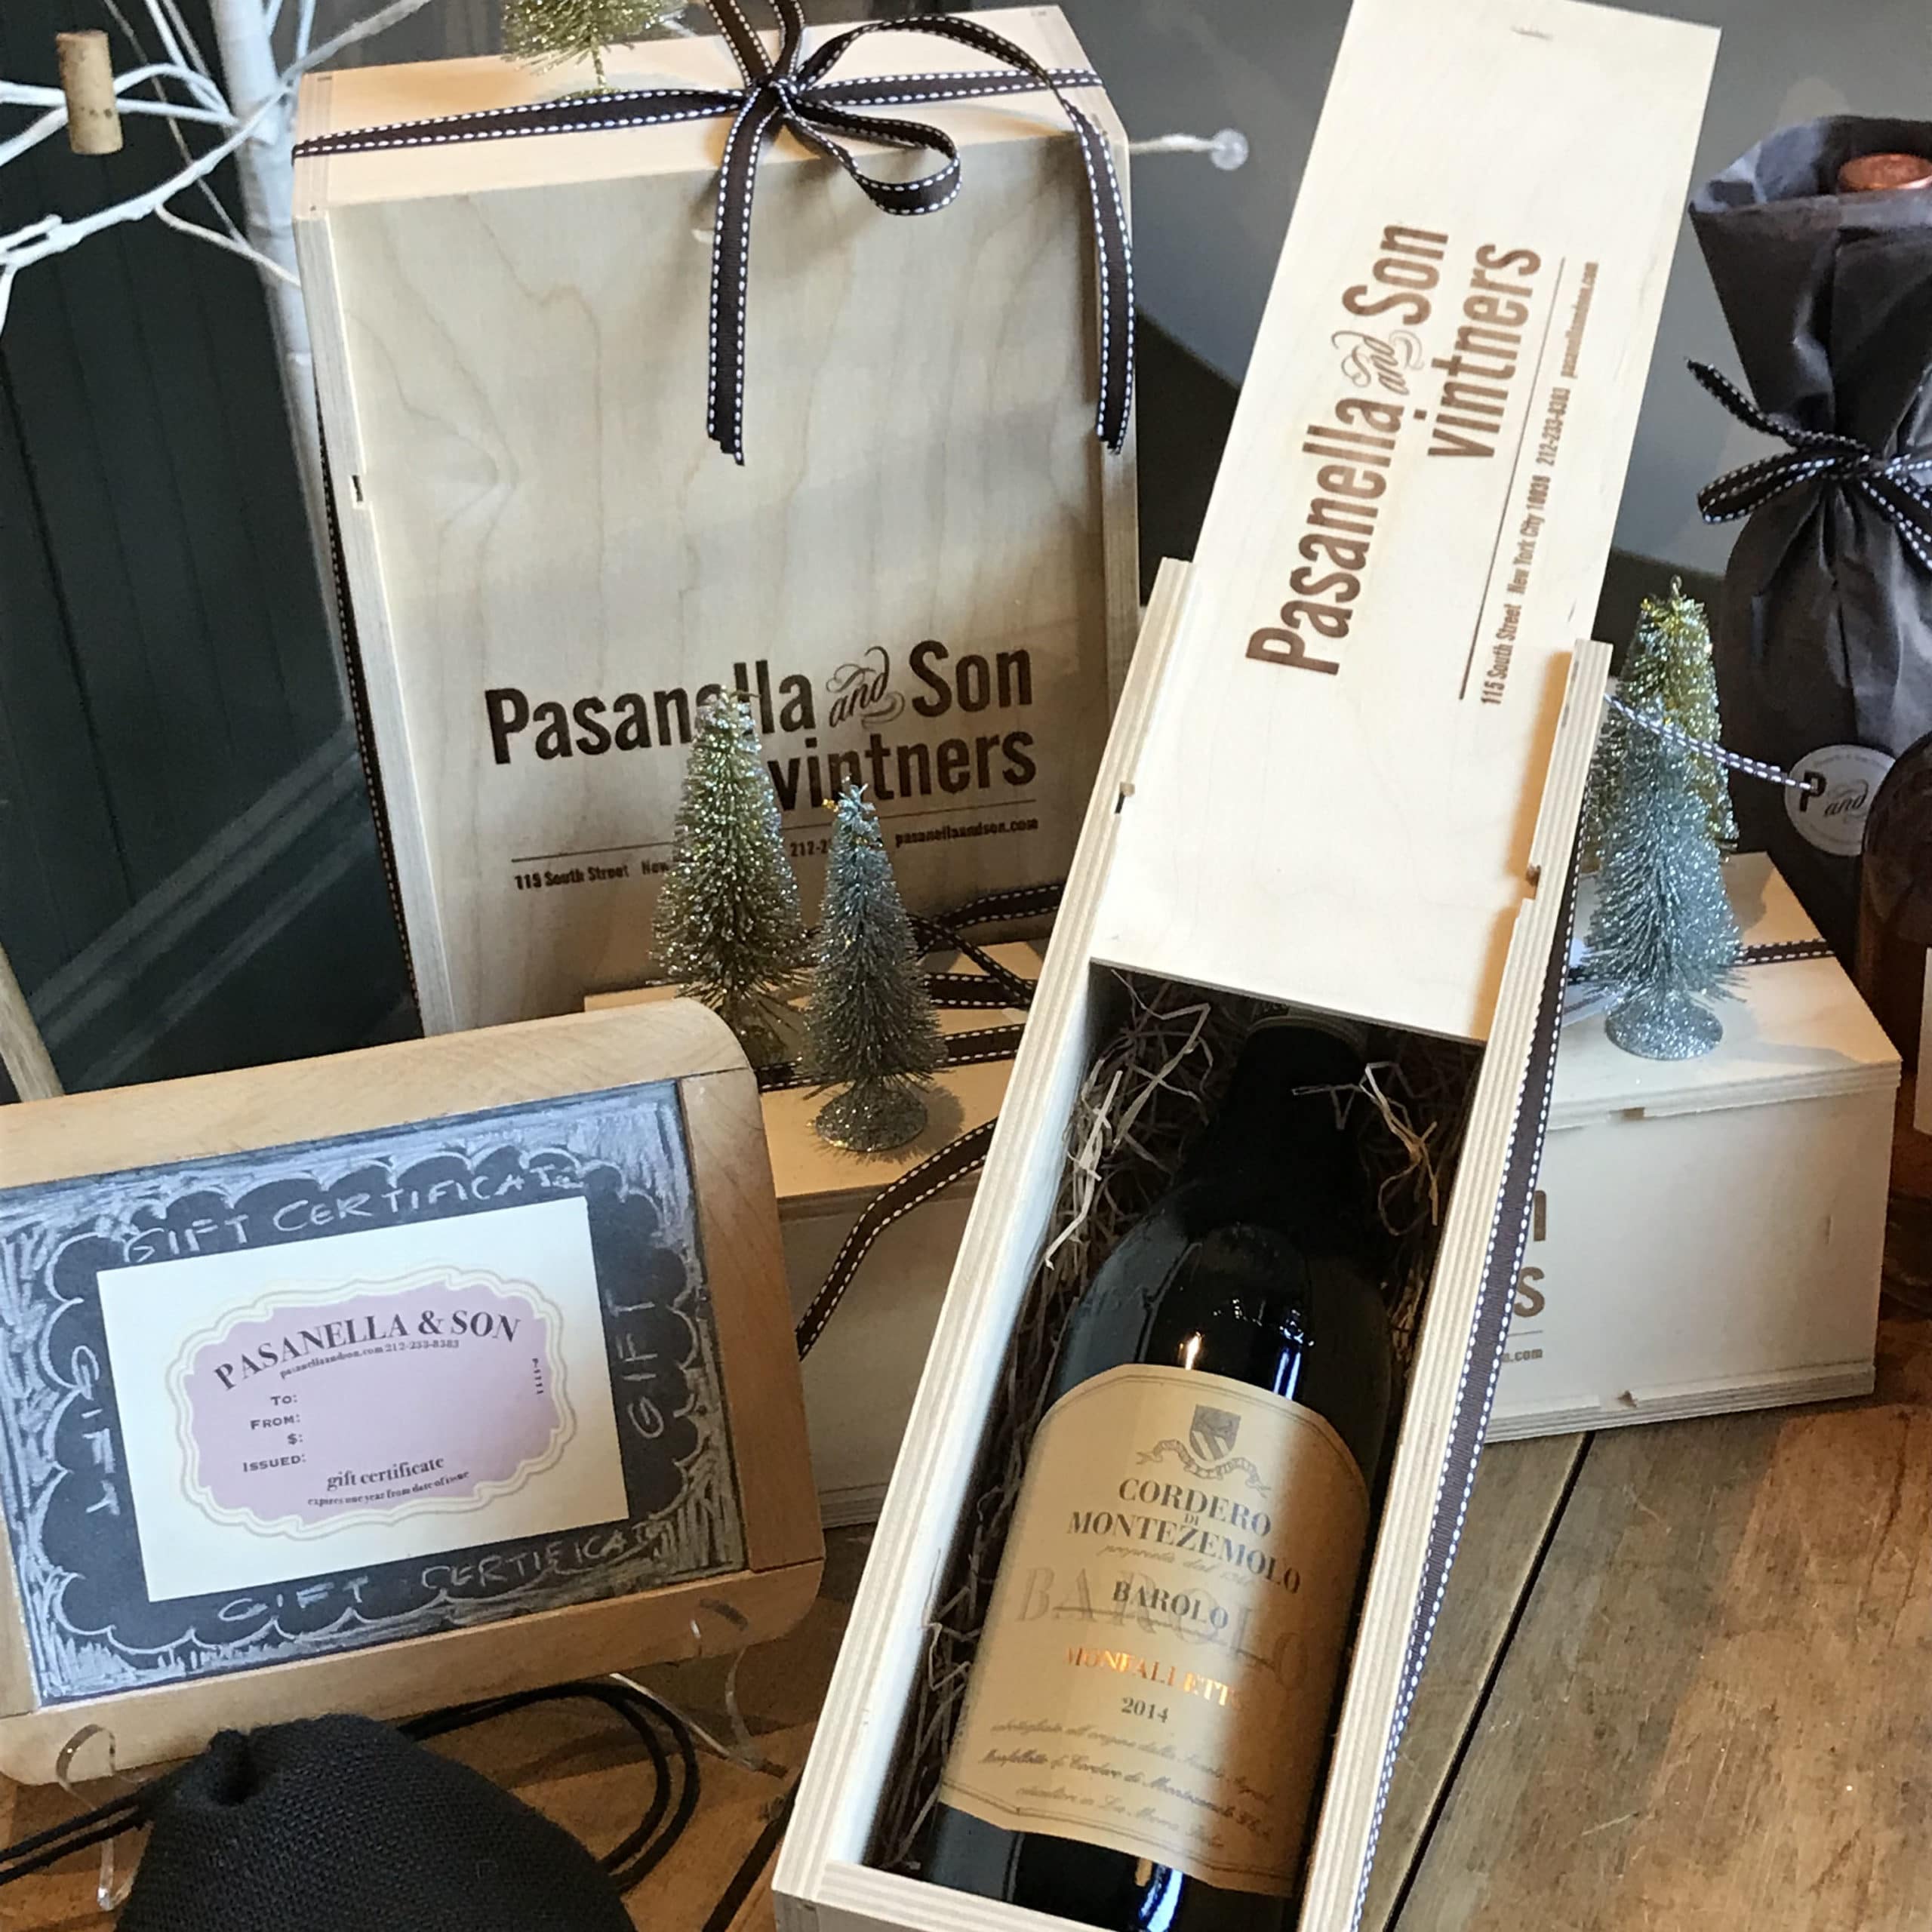 Pasanella & Son gift box of wine